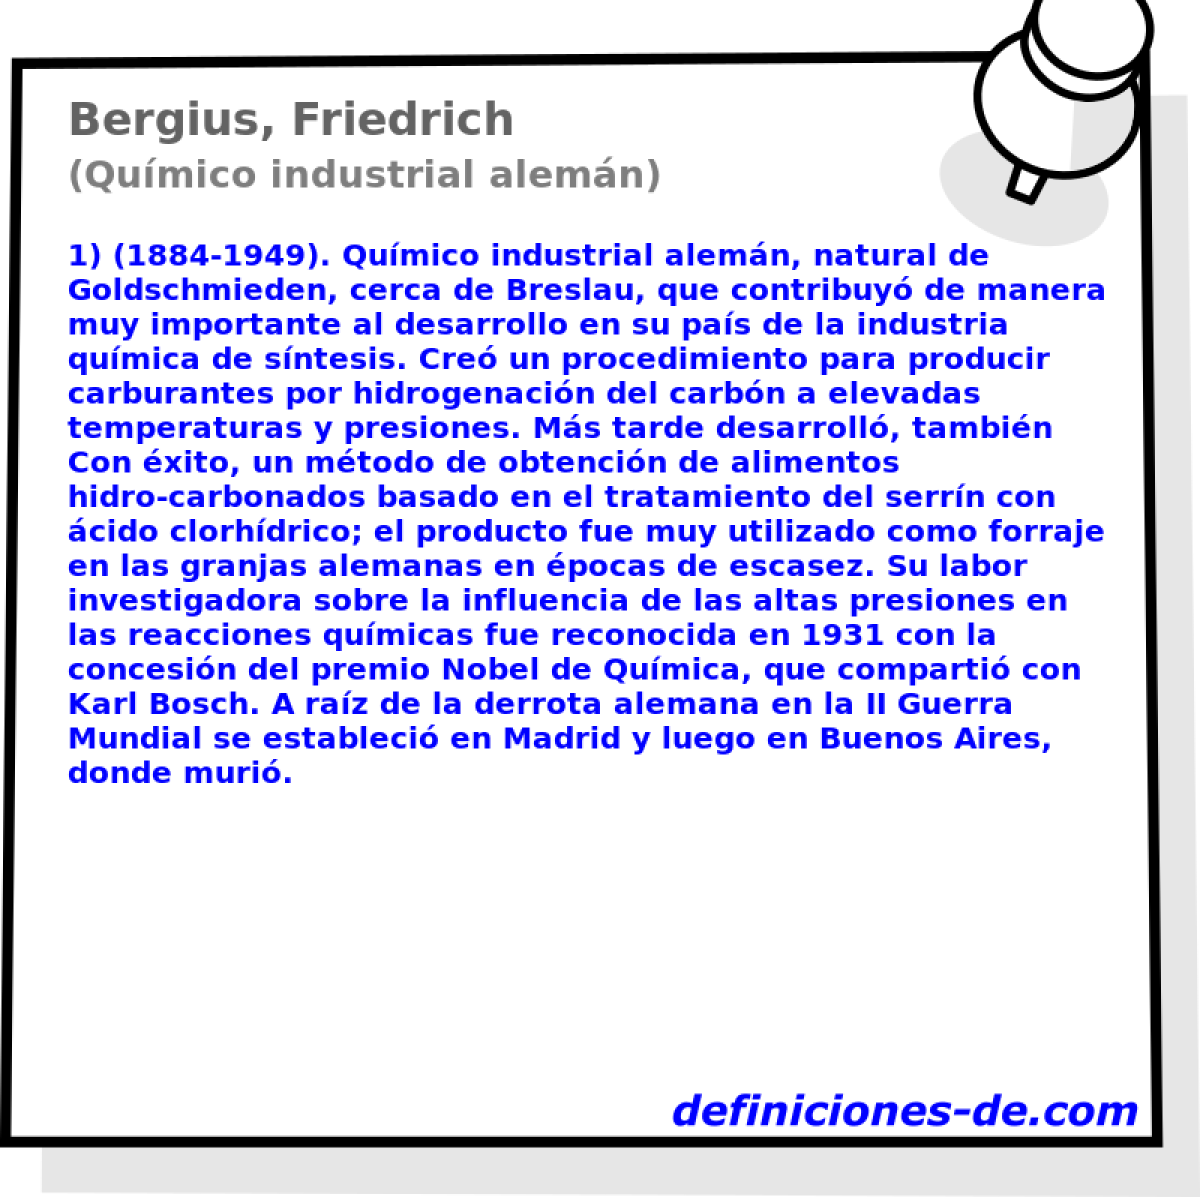 Bergius, Friedrich (Qumico industrial alemn)